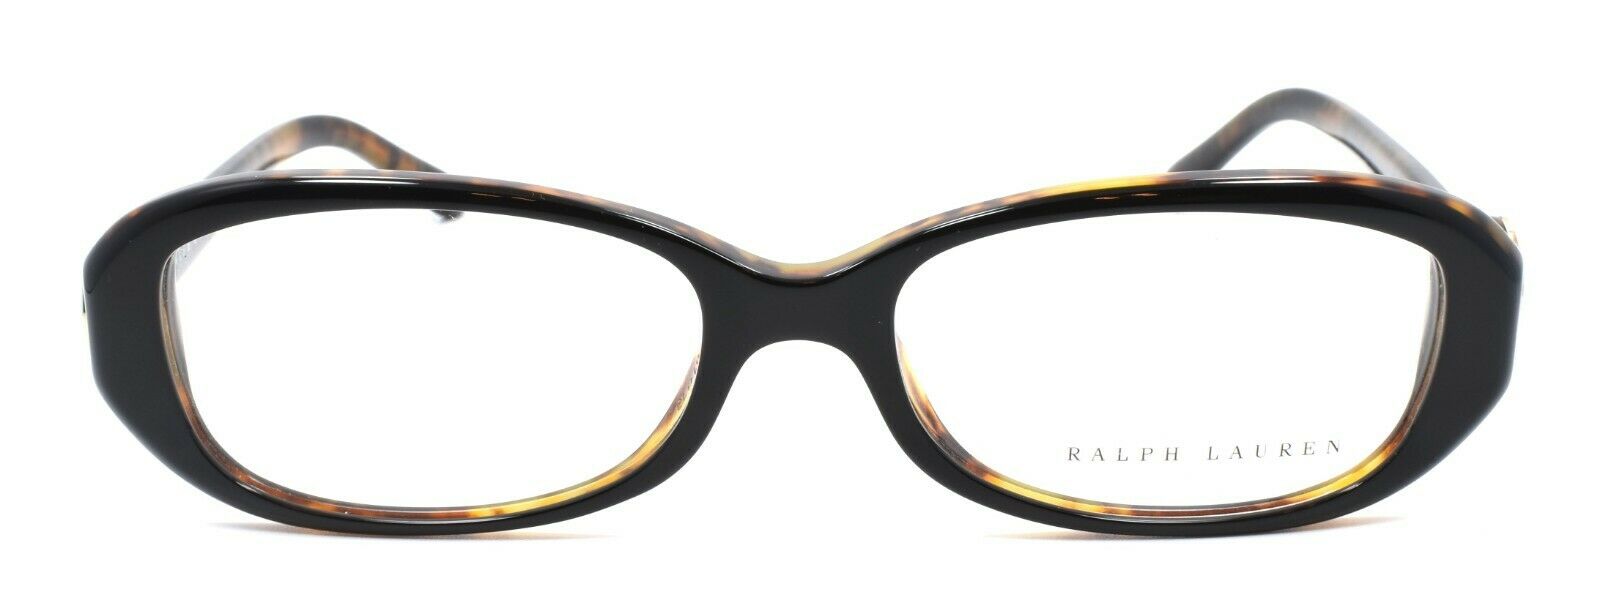 2-Ralph Lauren RL6074 5260 Women's Eyeglasses Frames 51-16-140 Black Havana ITALY-713132359129-IKSpecs